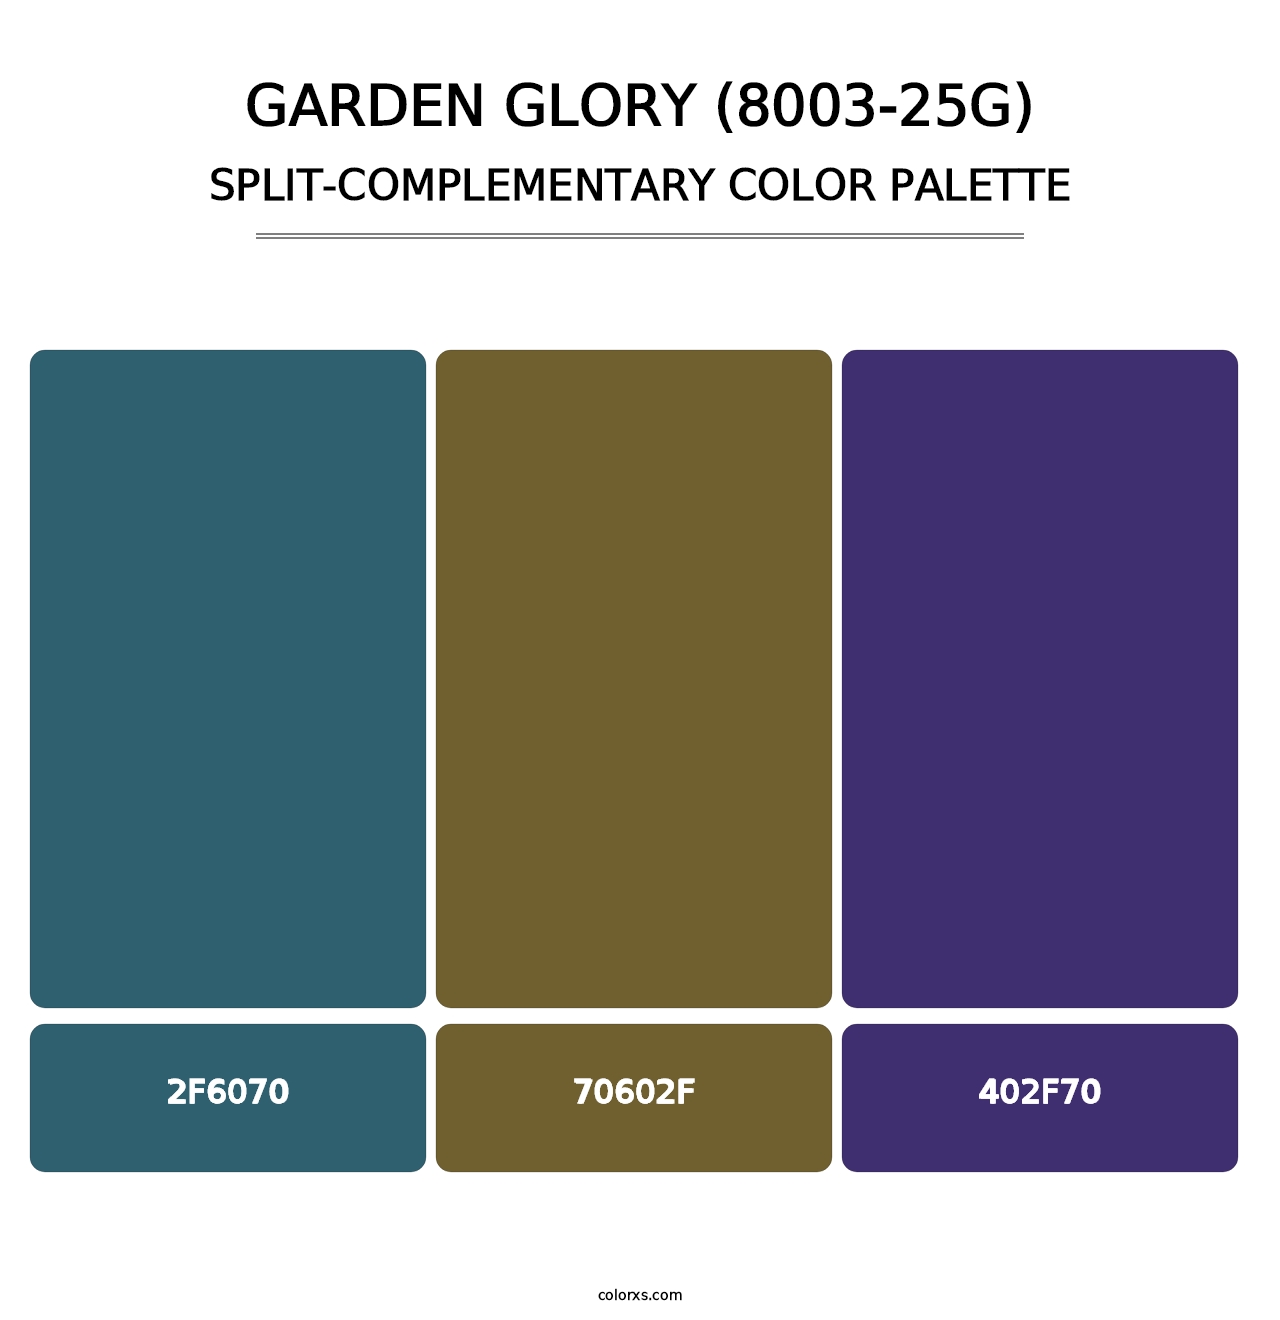 Garden Glory (8003-25G) - Split-Complementary Color Palette